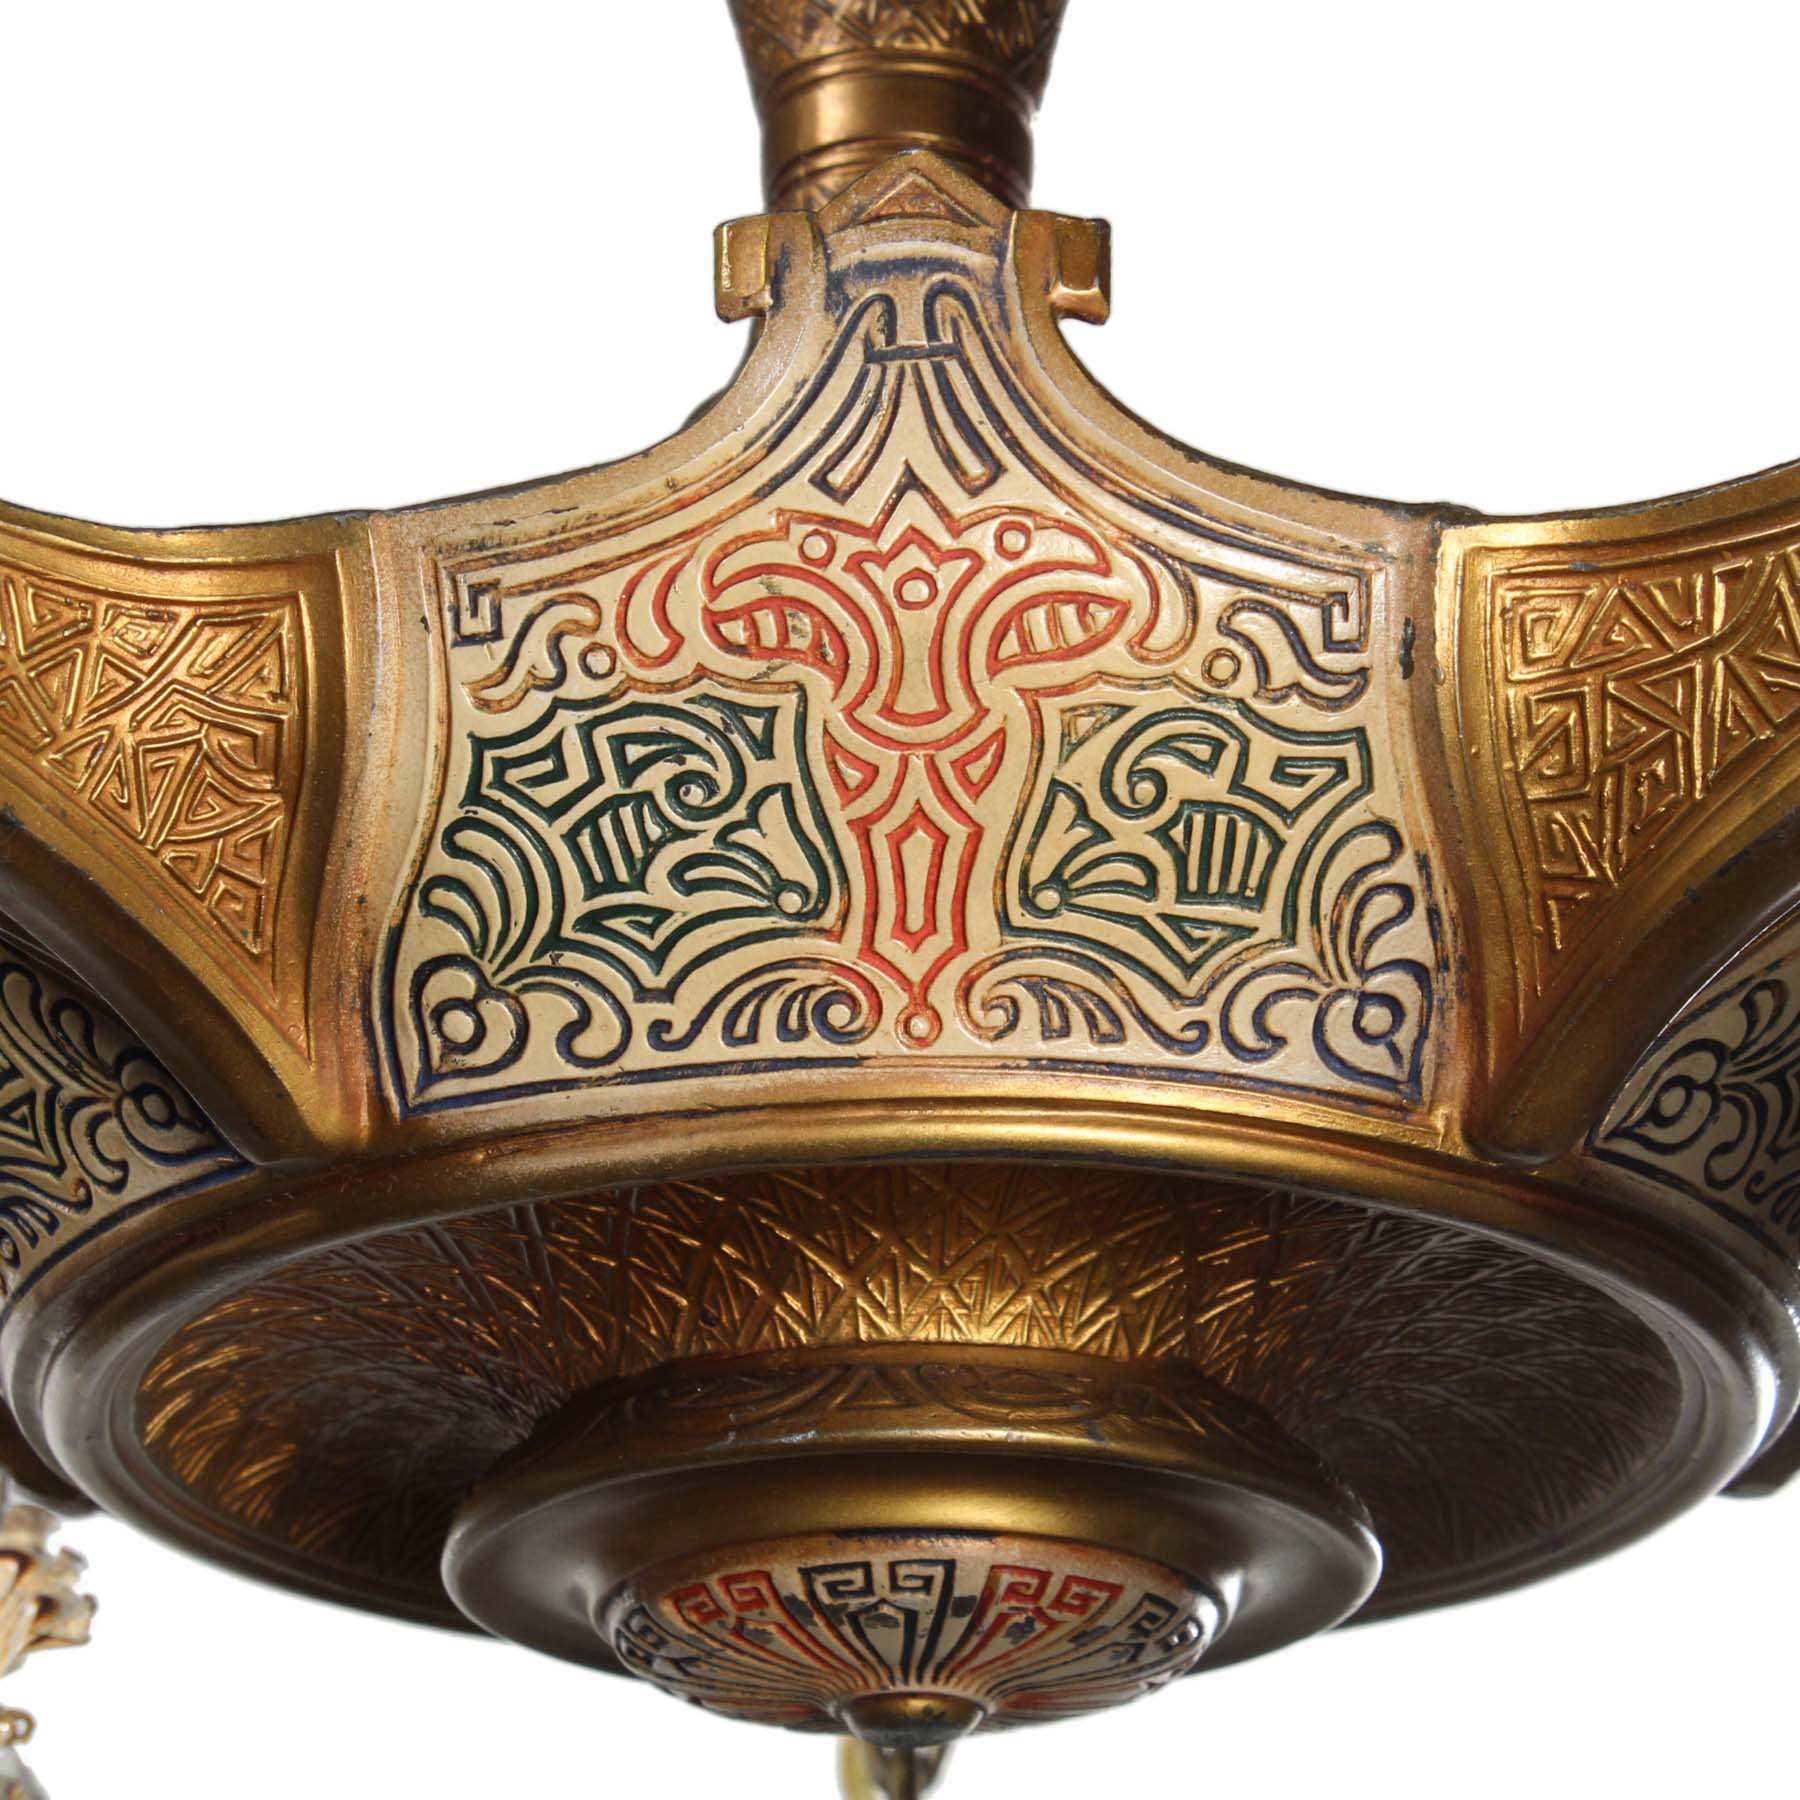 SOLD Antique Spanish Revival Chandelier, Empire Lighting-69984